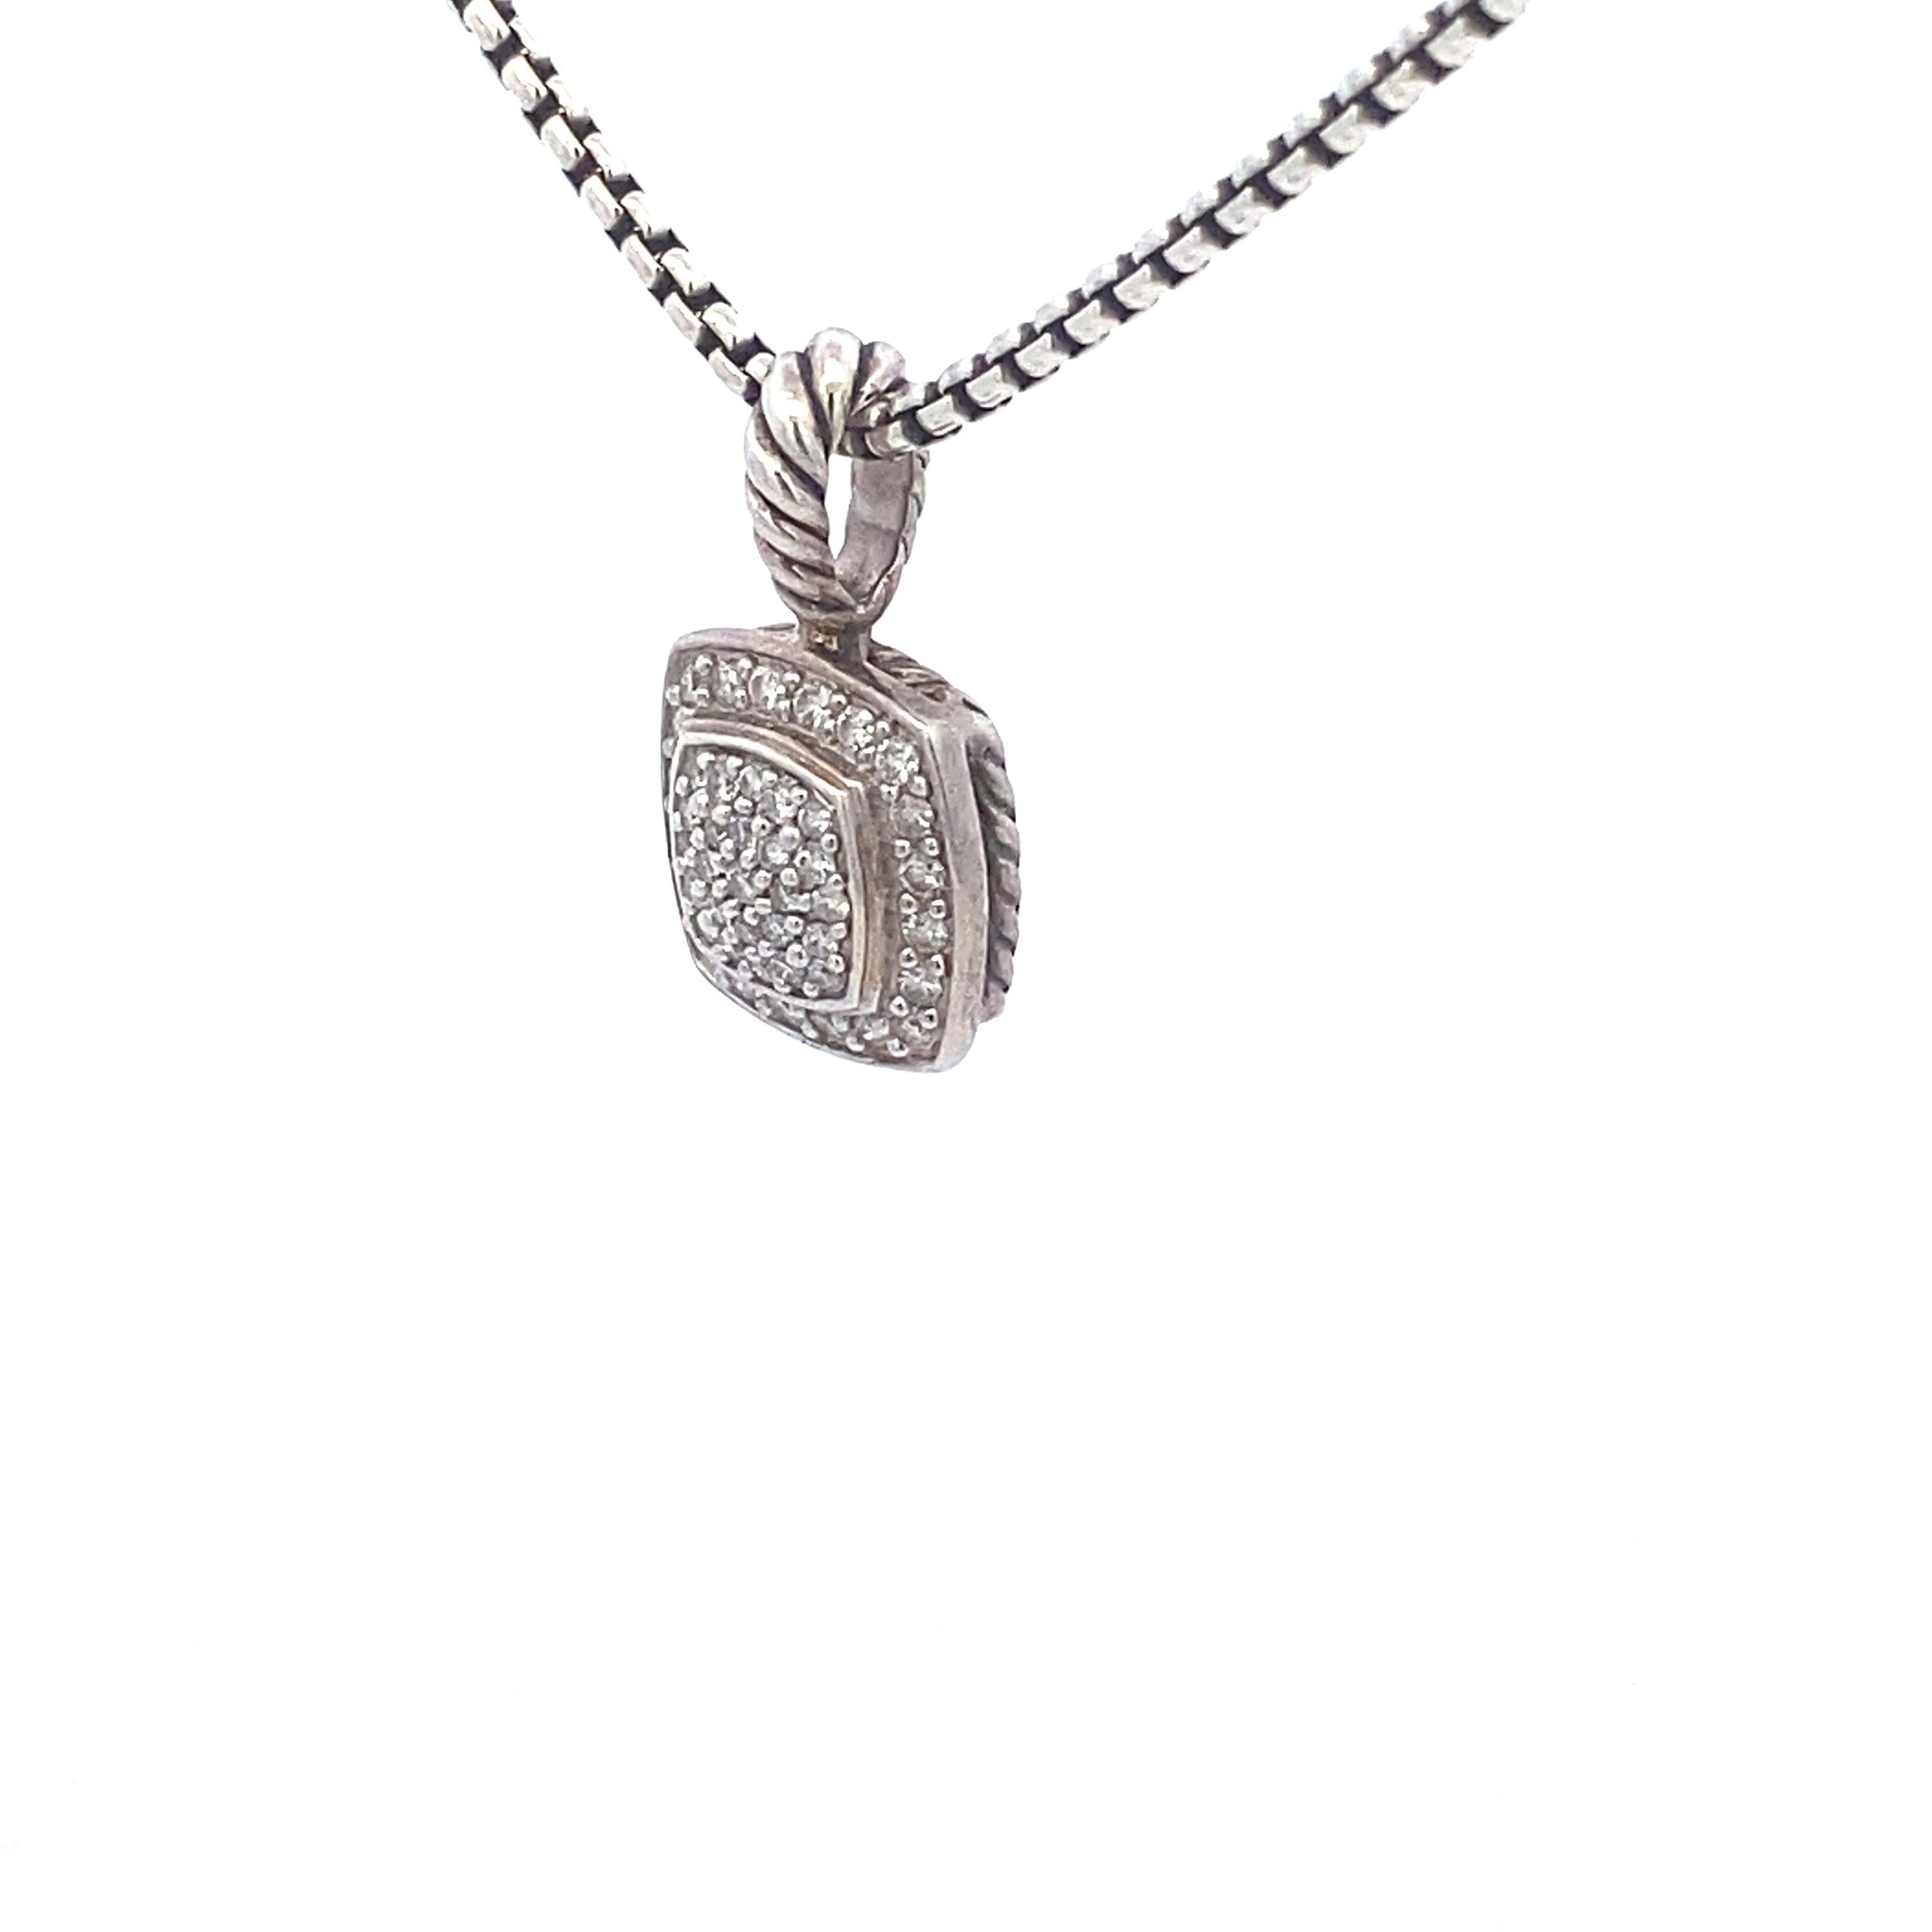 Brilliant Cut David Yurman Petite Albion Pendant Necklace in Sterling Silver with Pavé Diamon For Sale